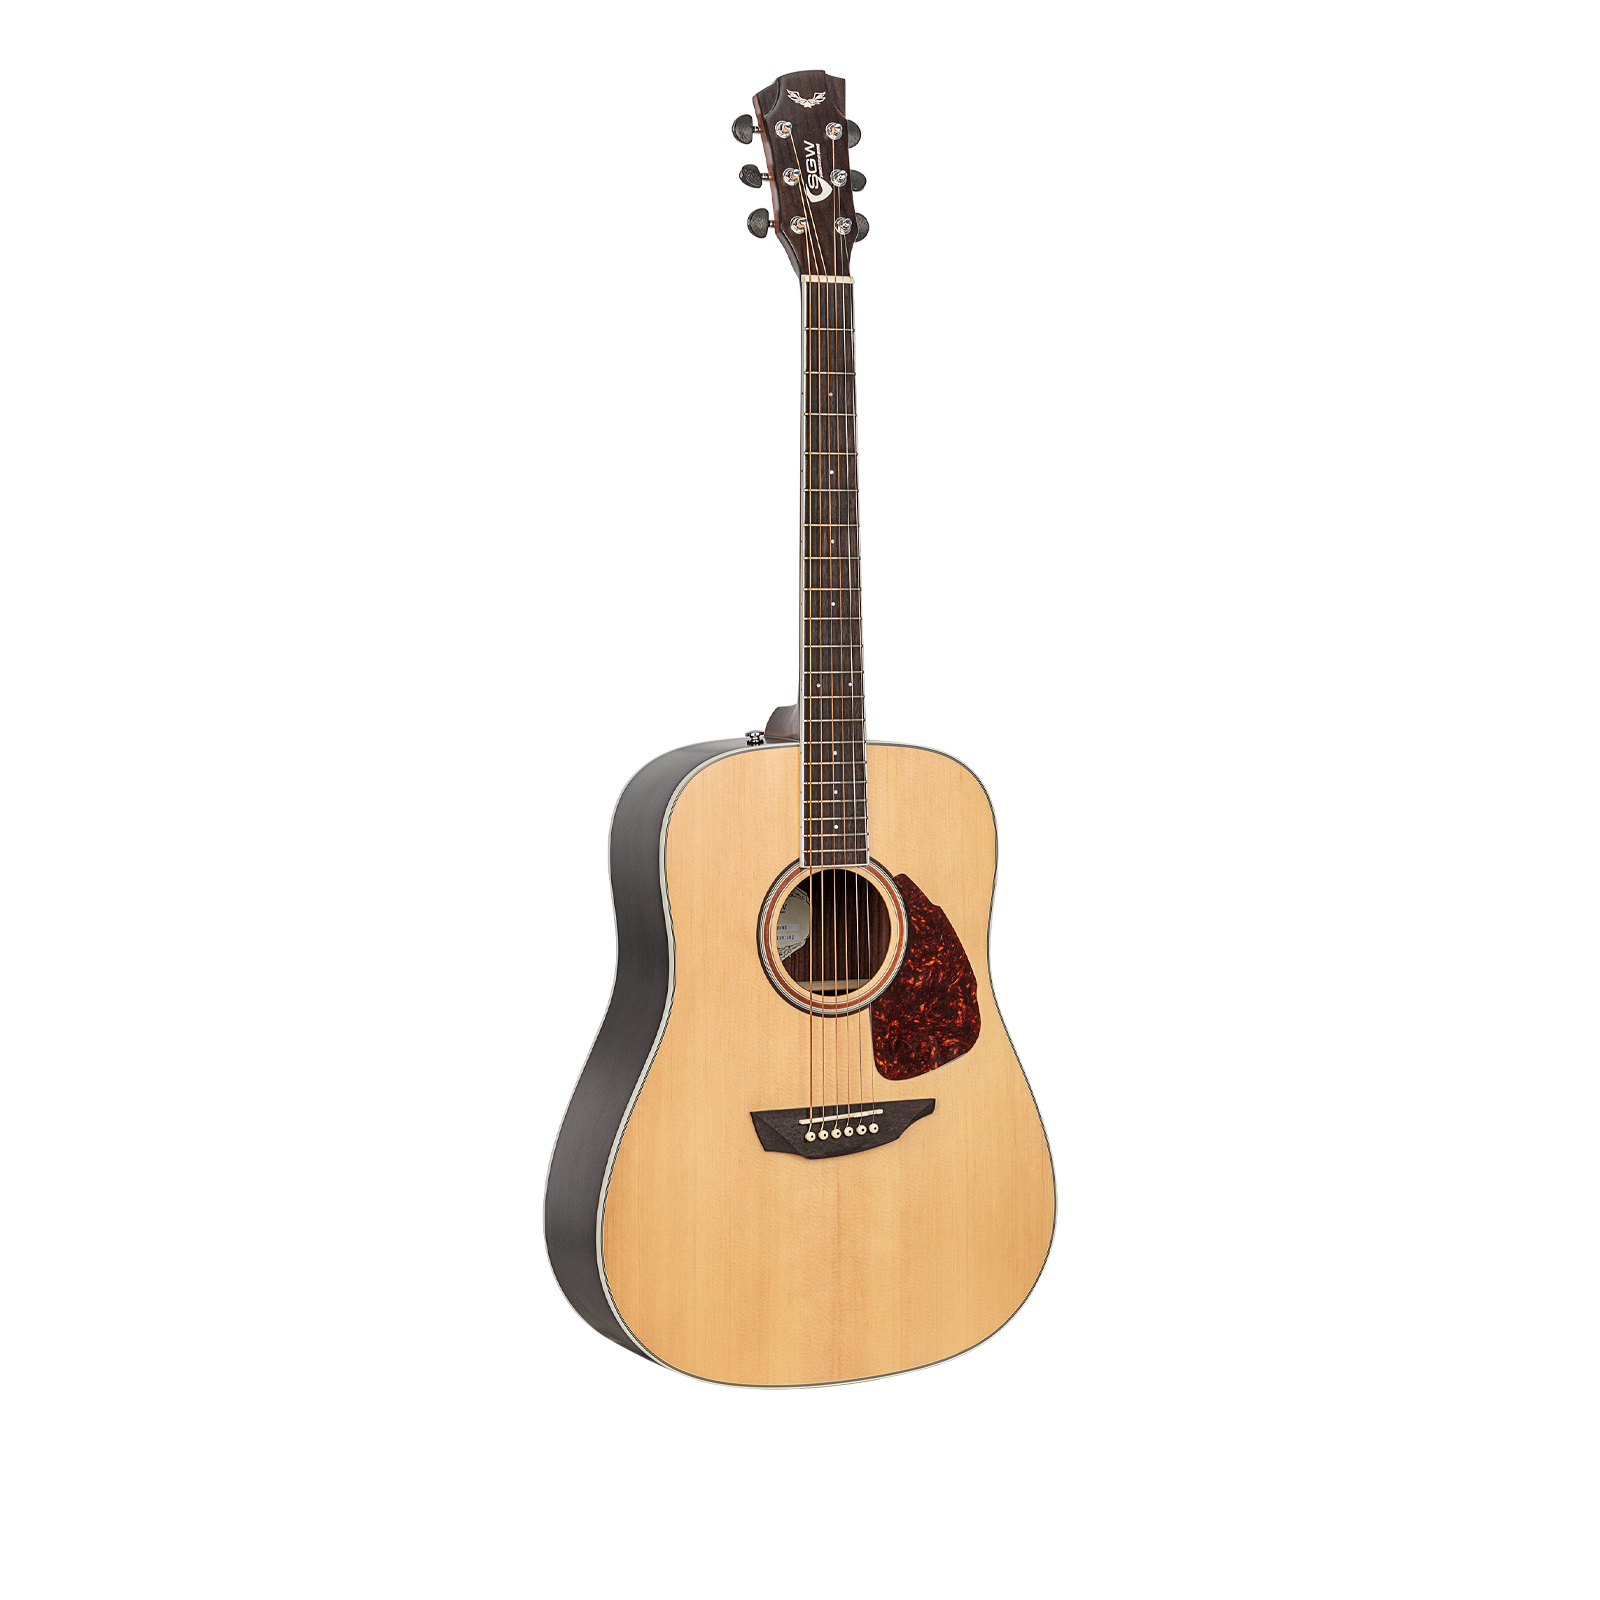 SGW S500DNS Dreadnought Acoustic Guitar 500 Series Natural